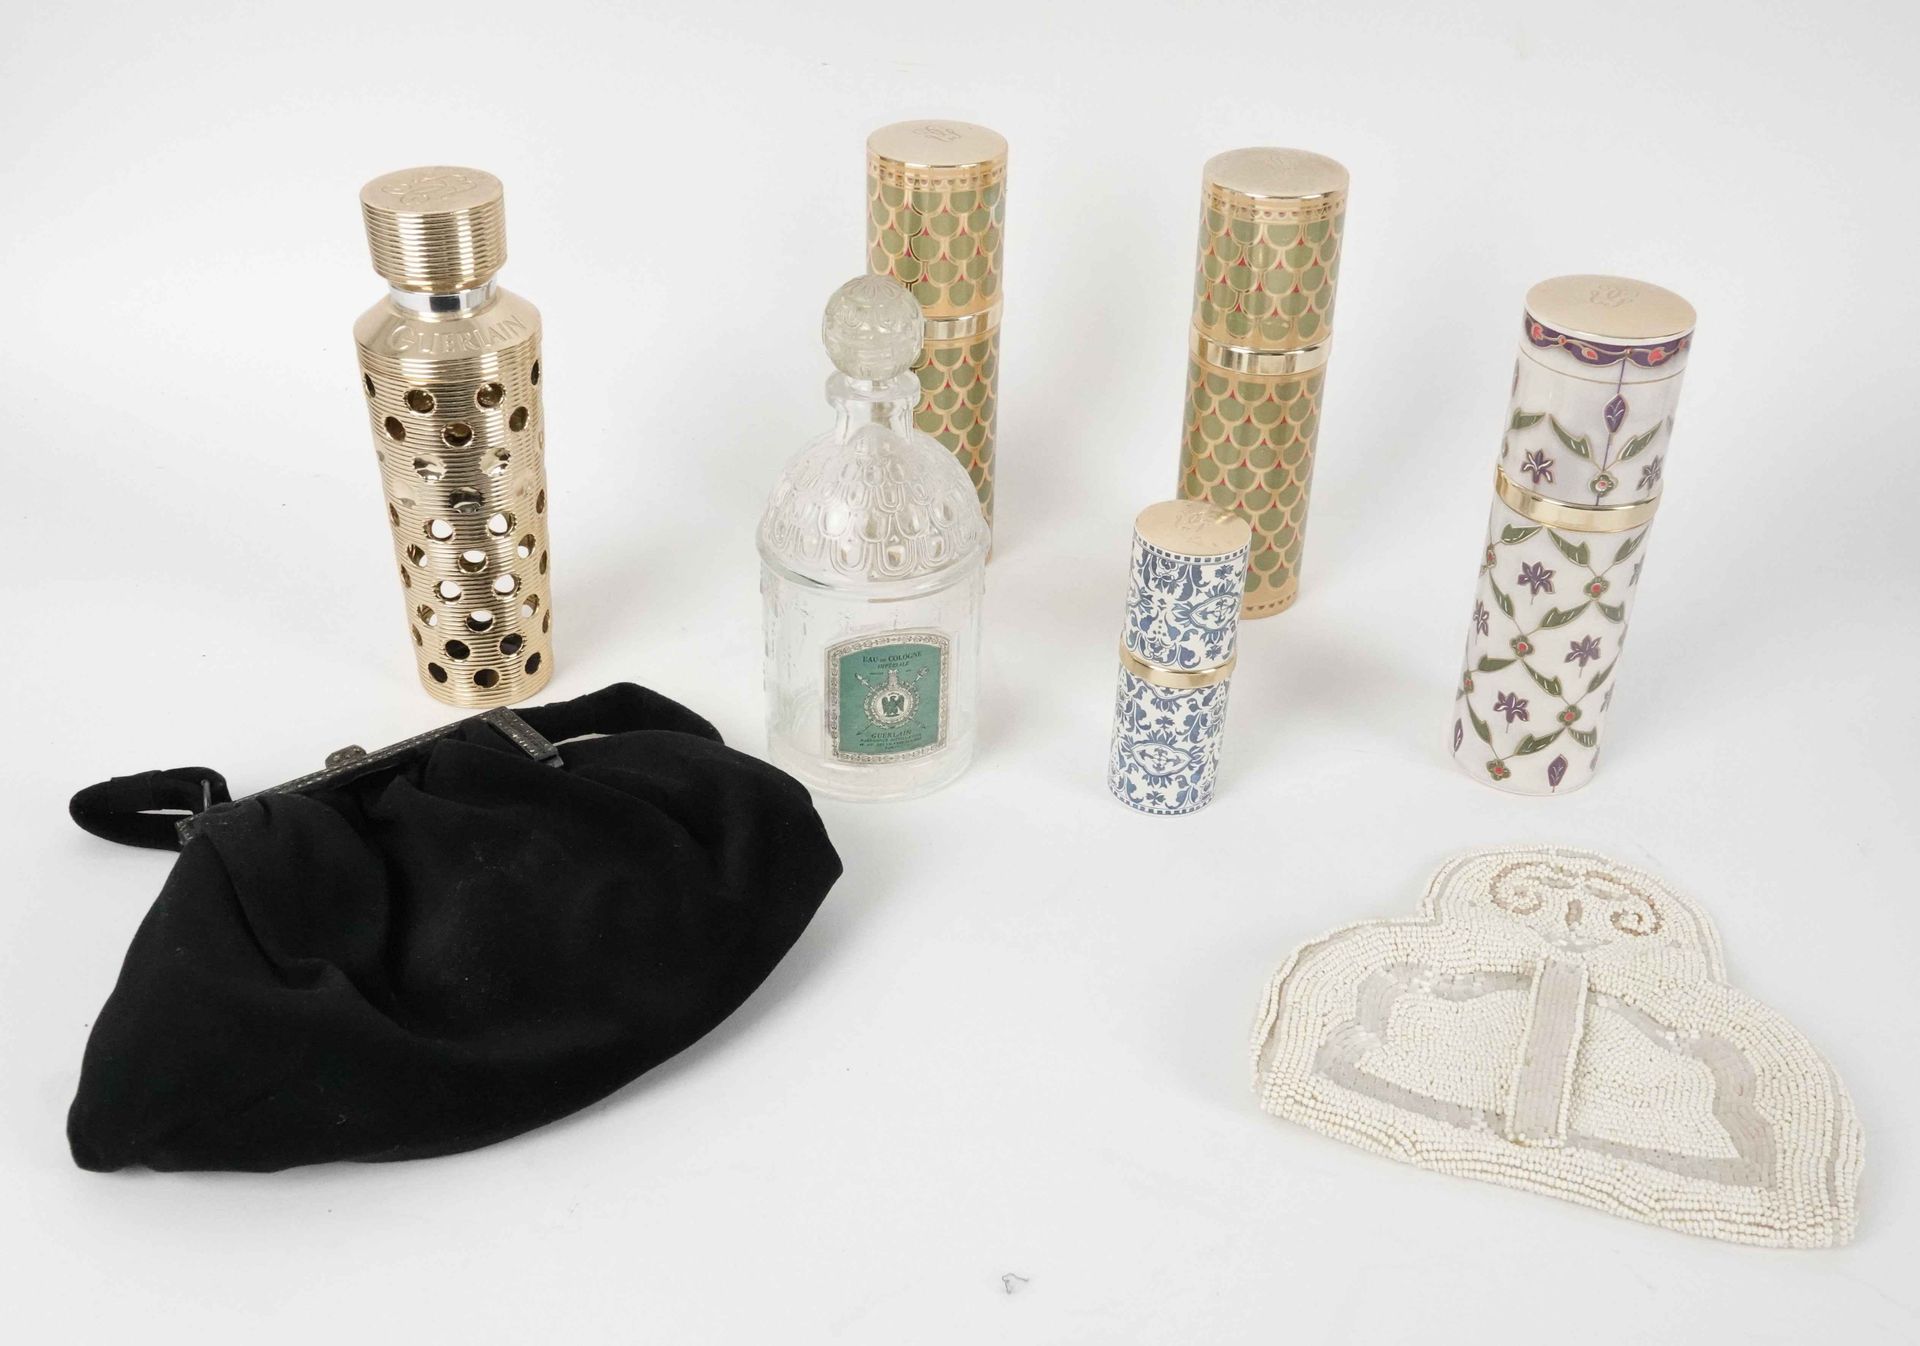 Null 时尚/复古

一套包括娇兰在内的香水瓶和装饰艺术风格的晚装袋

如是